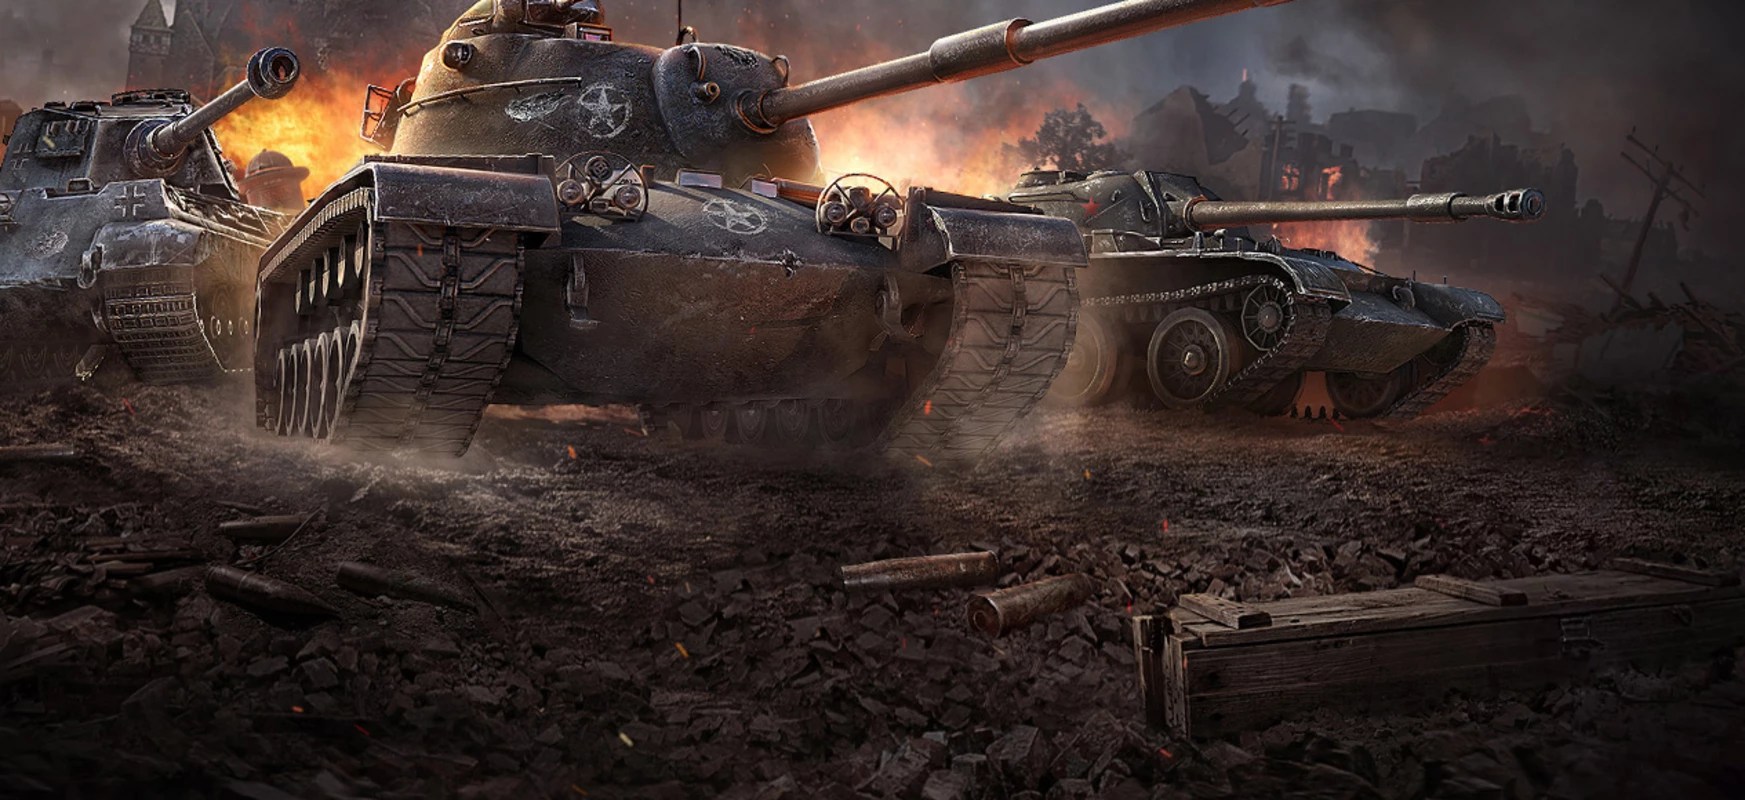 World of Tanks Blitz 3D online 10.7.0.382 APK for Android Screenshot 1